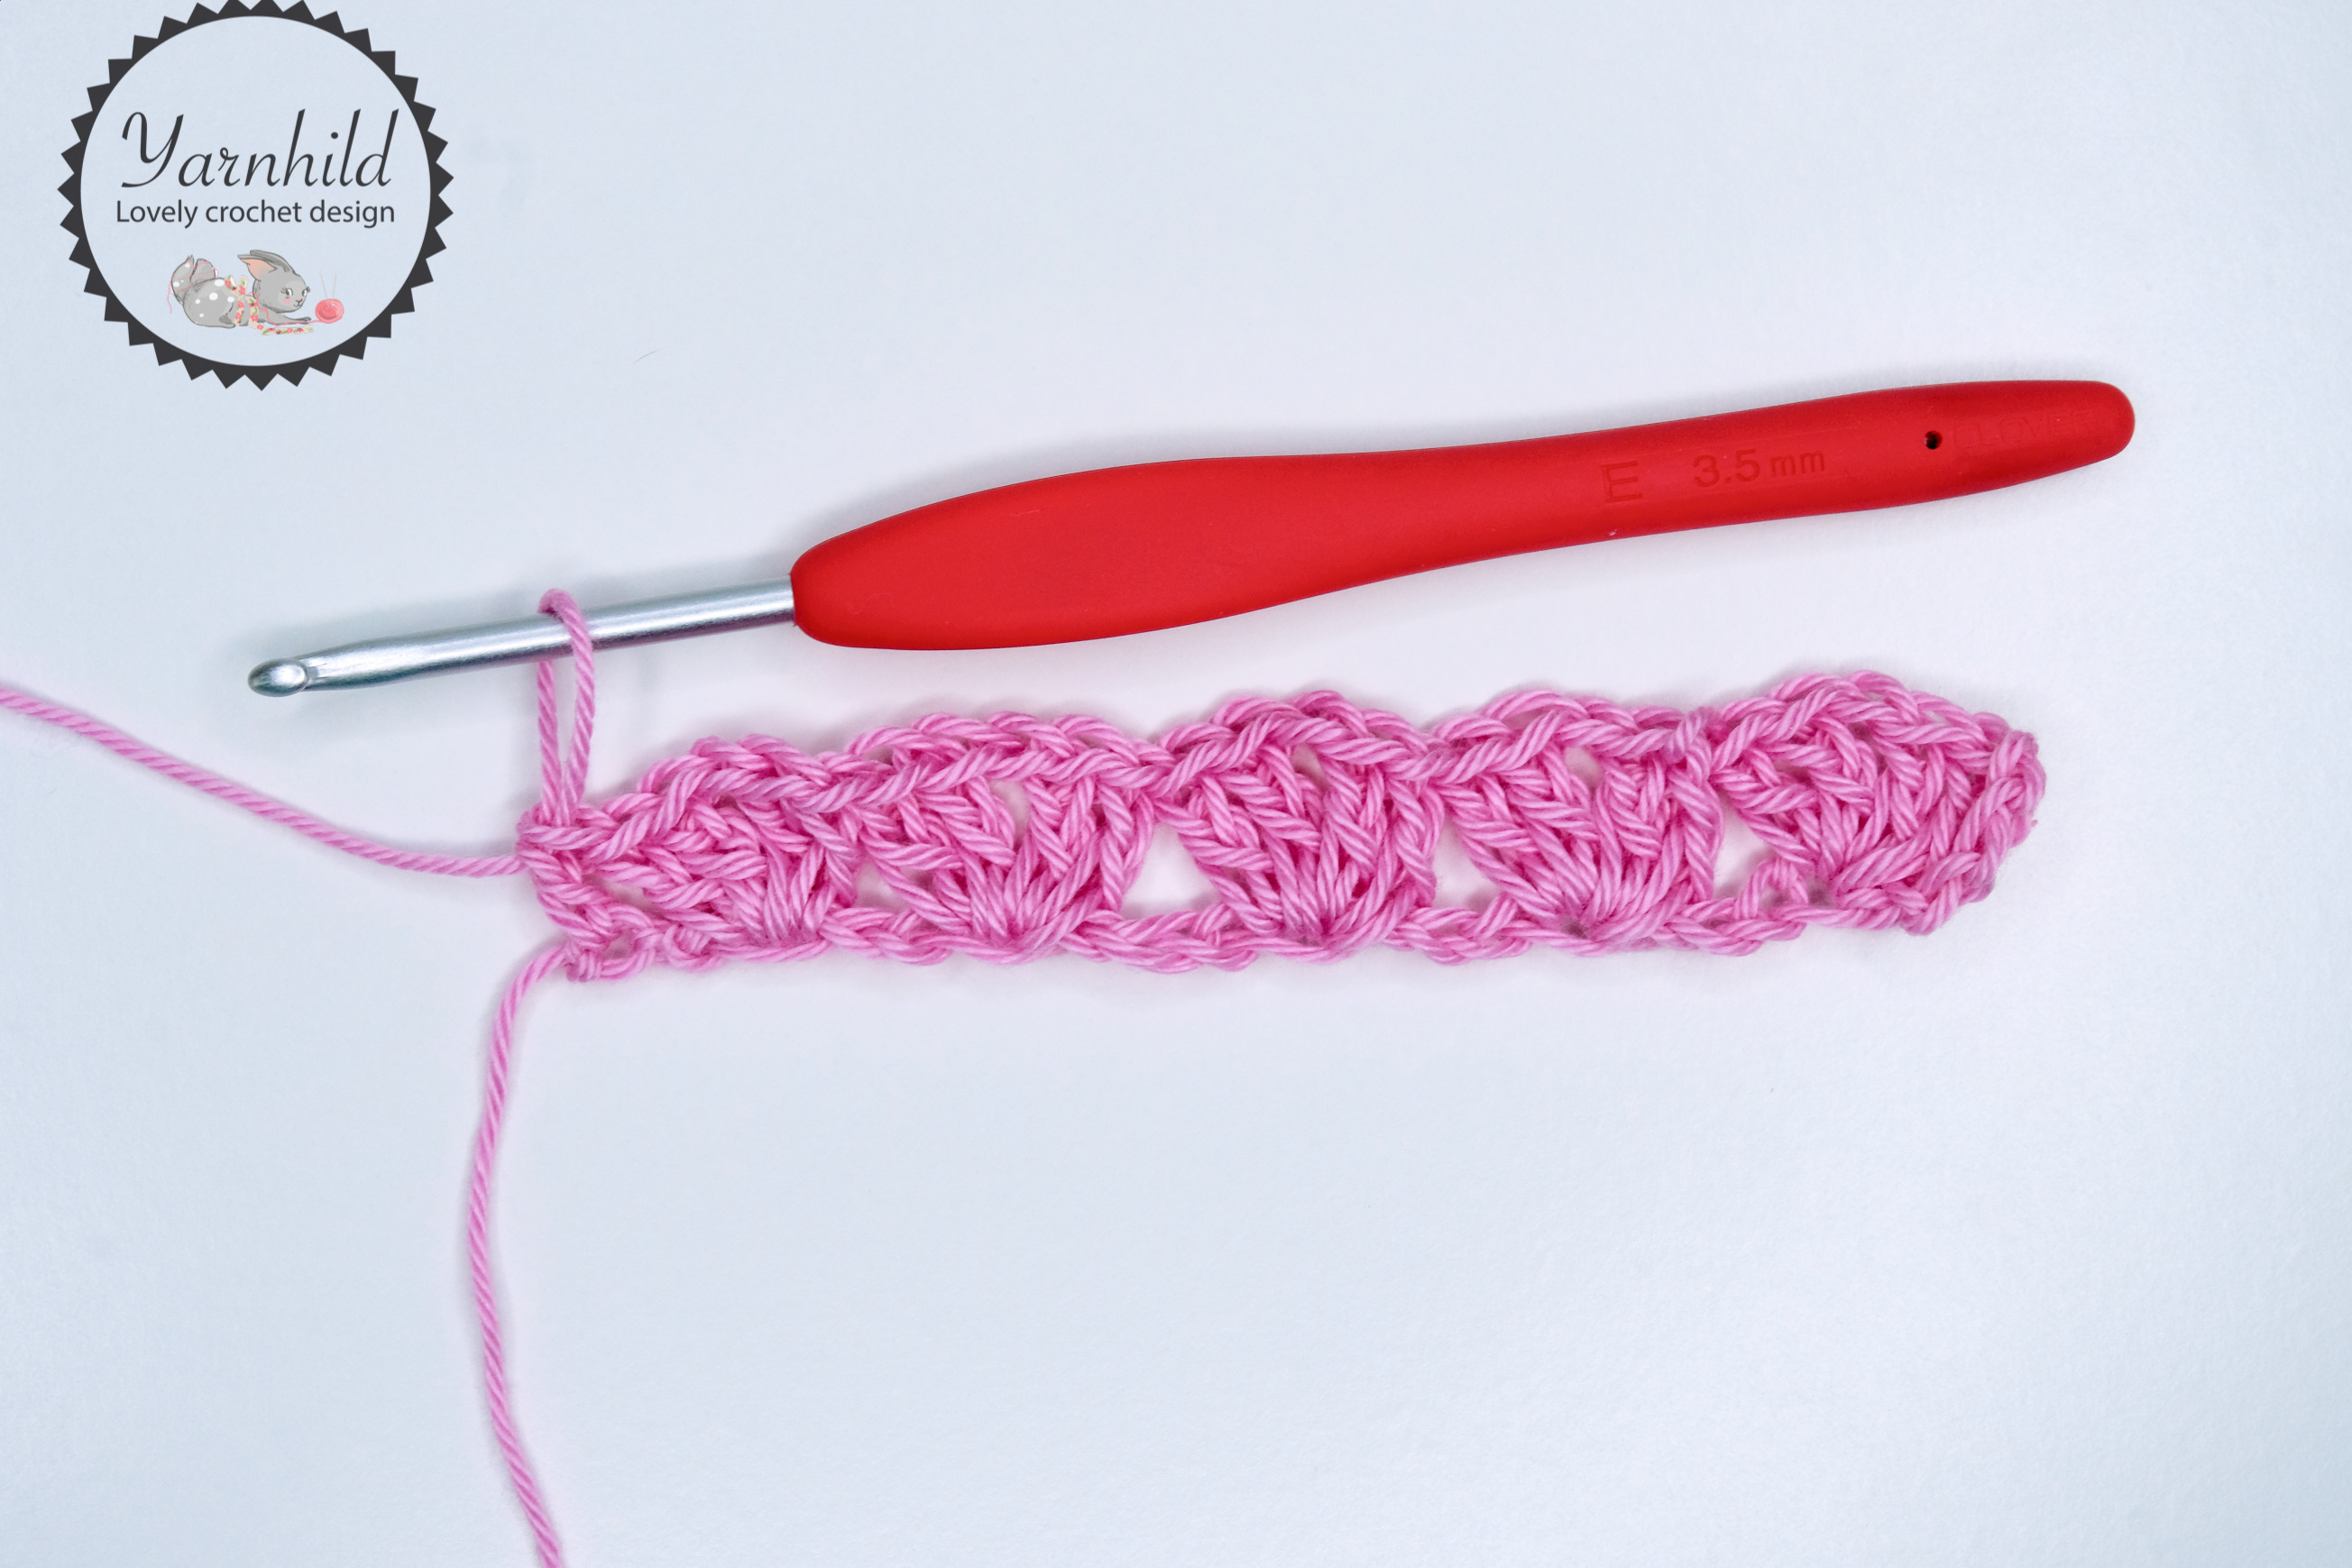 Crochet stitches - The Iris Stitch 